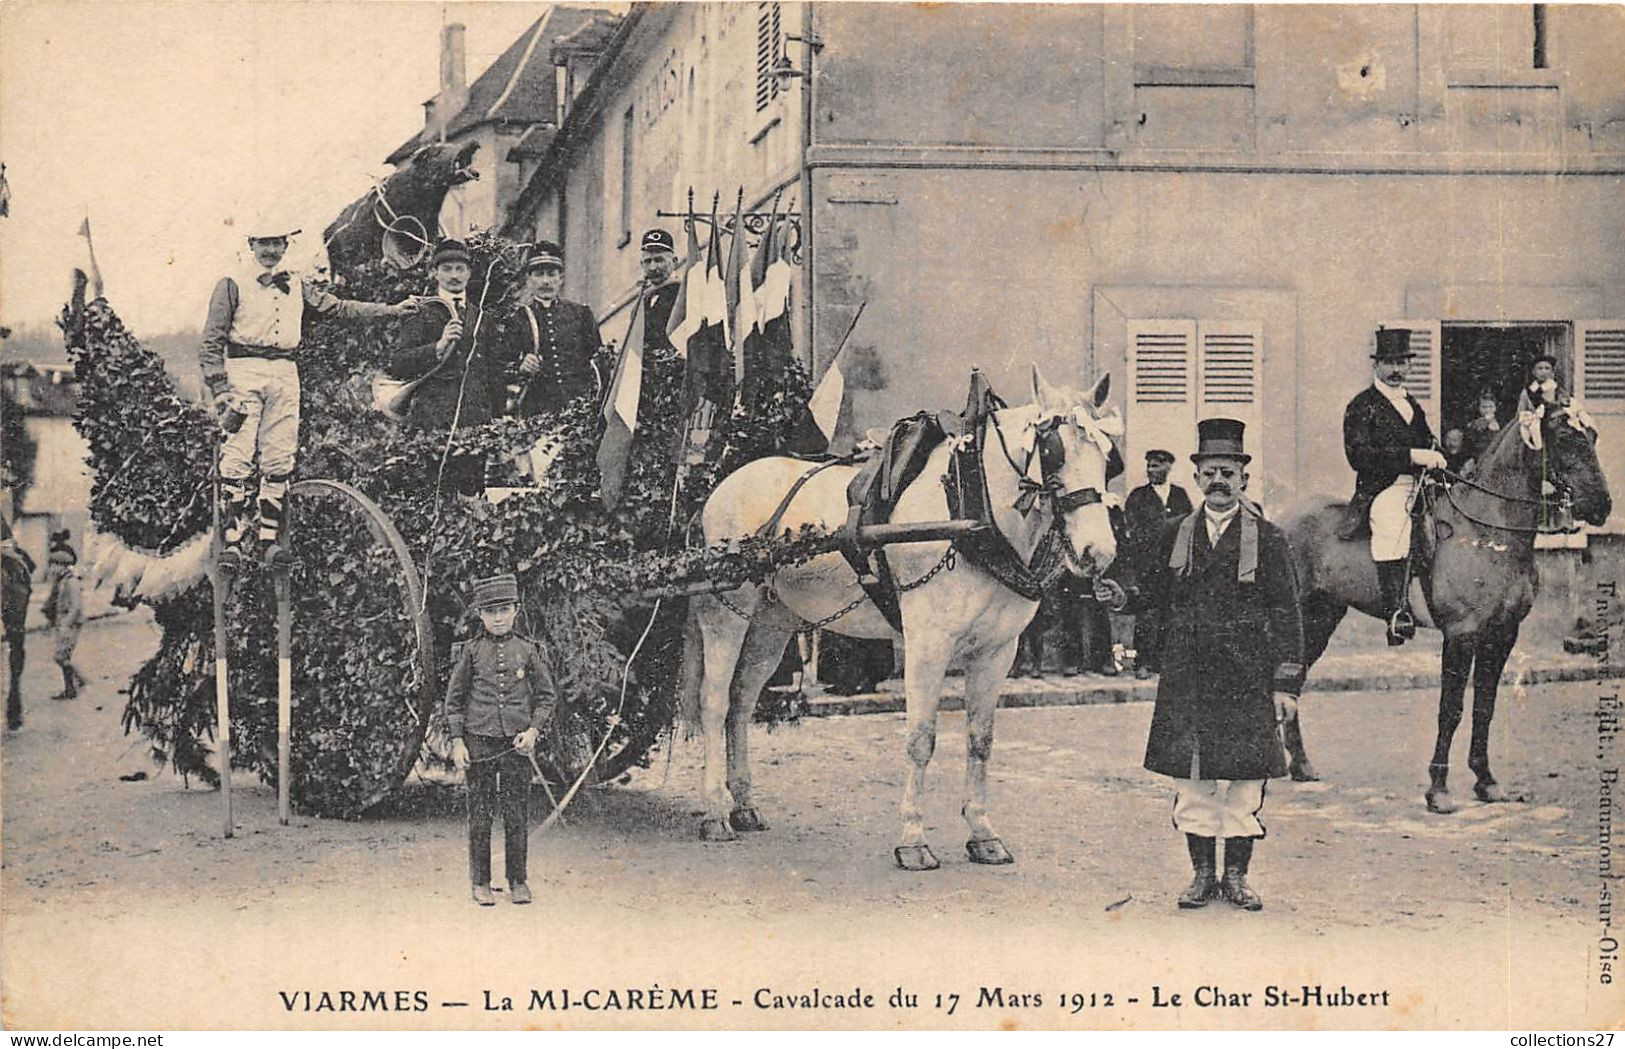 95-VIARMES- LA MI-CAREME- CAVALCADE DU 17 MARS 1912- LE CHAR SAINT-HUBERT - Viarmes